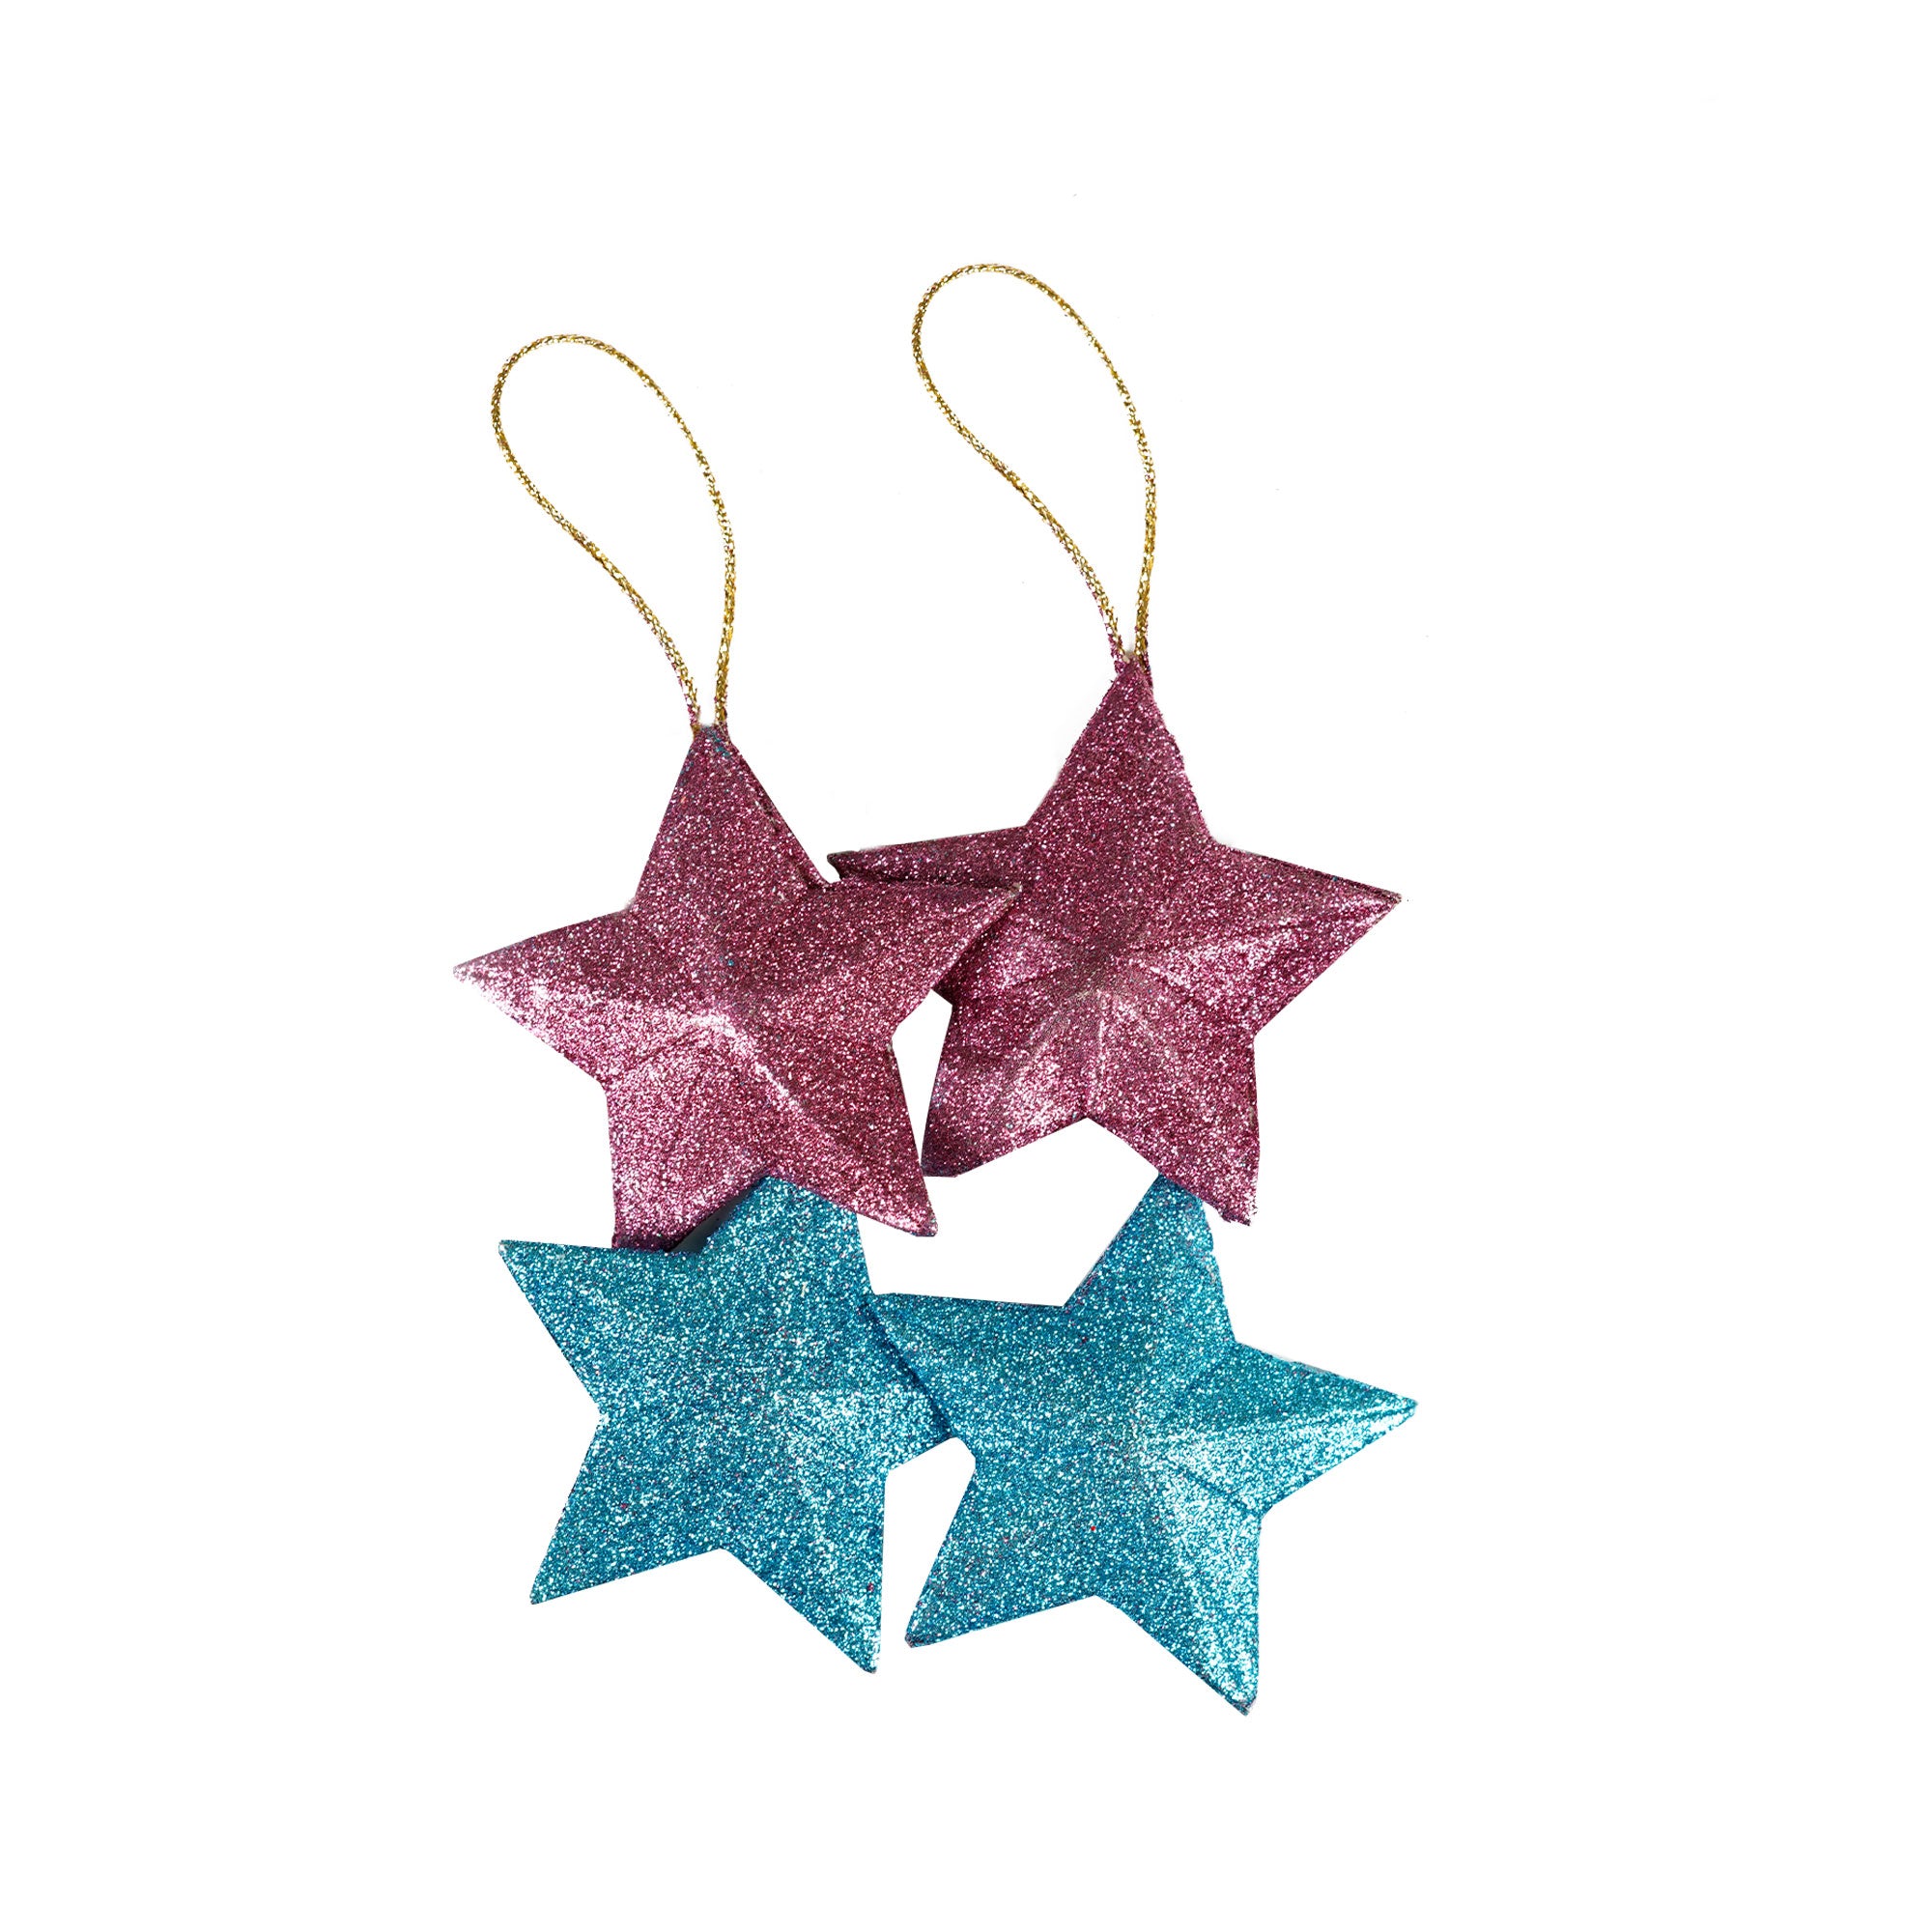 Handmade Christmas Ornaments - Bright Colours, Assorted